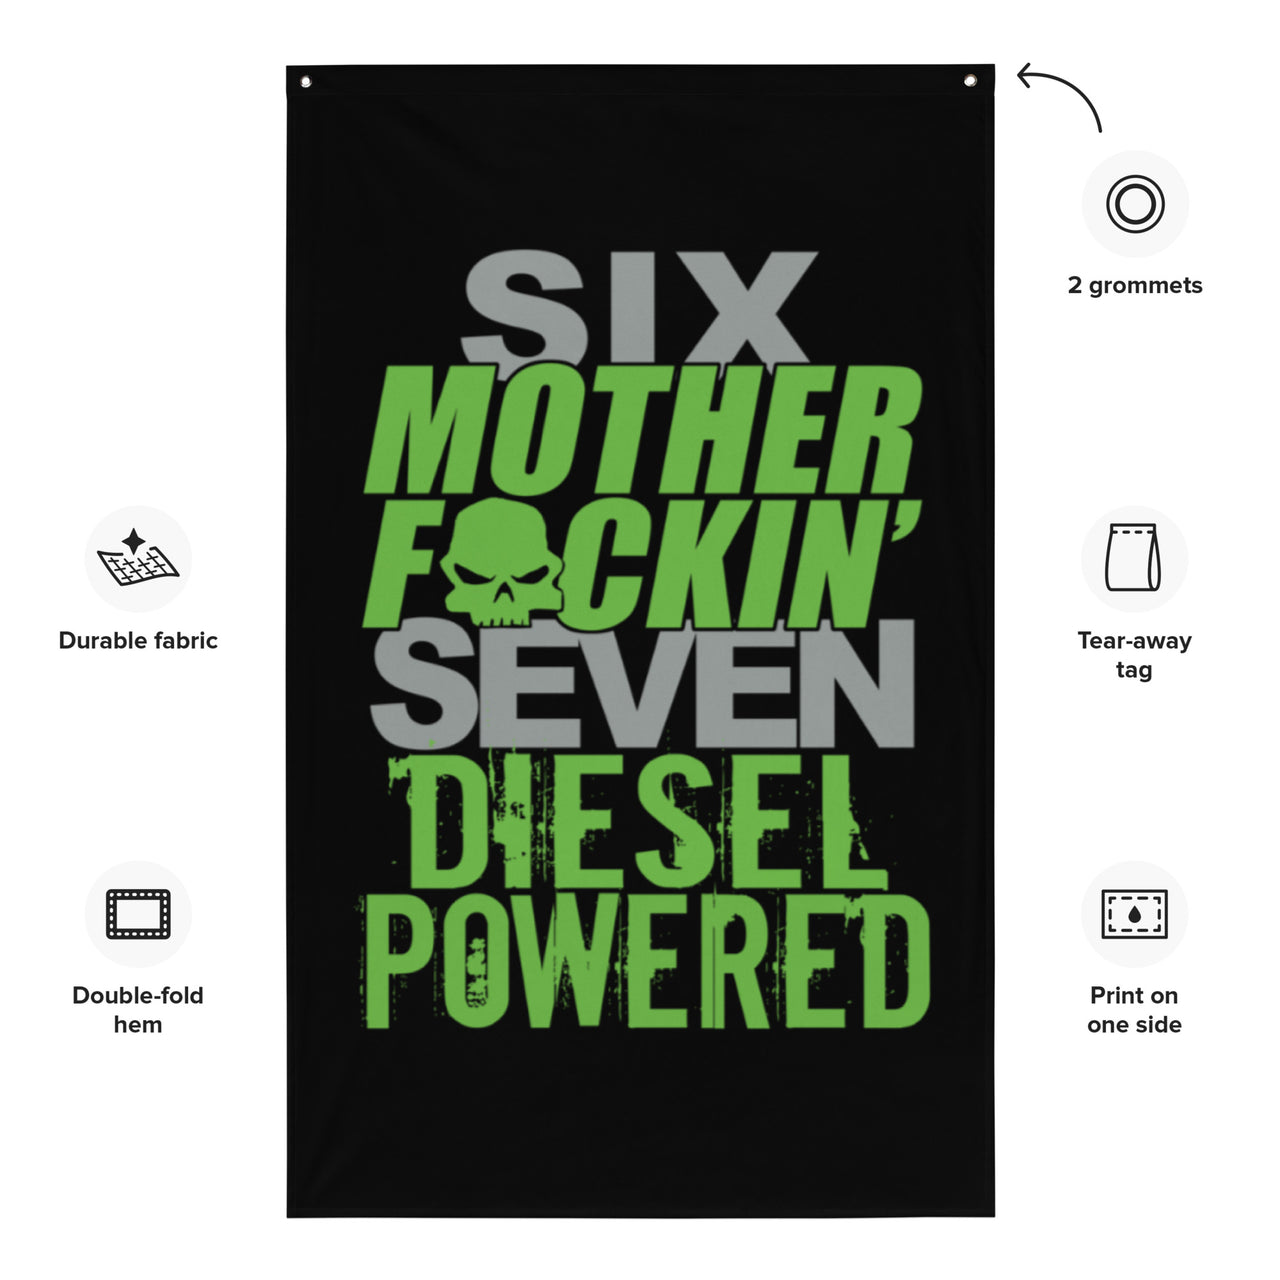 6.7 Power Stroke Diesel Flag details